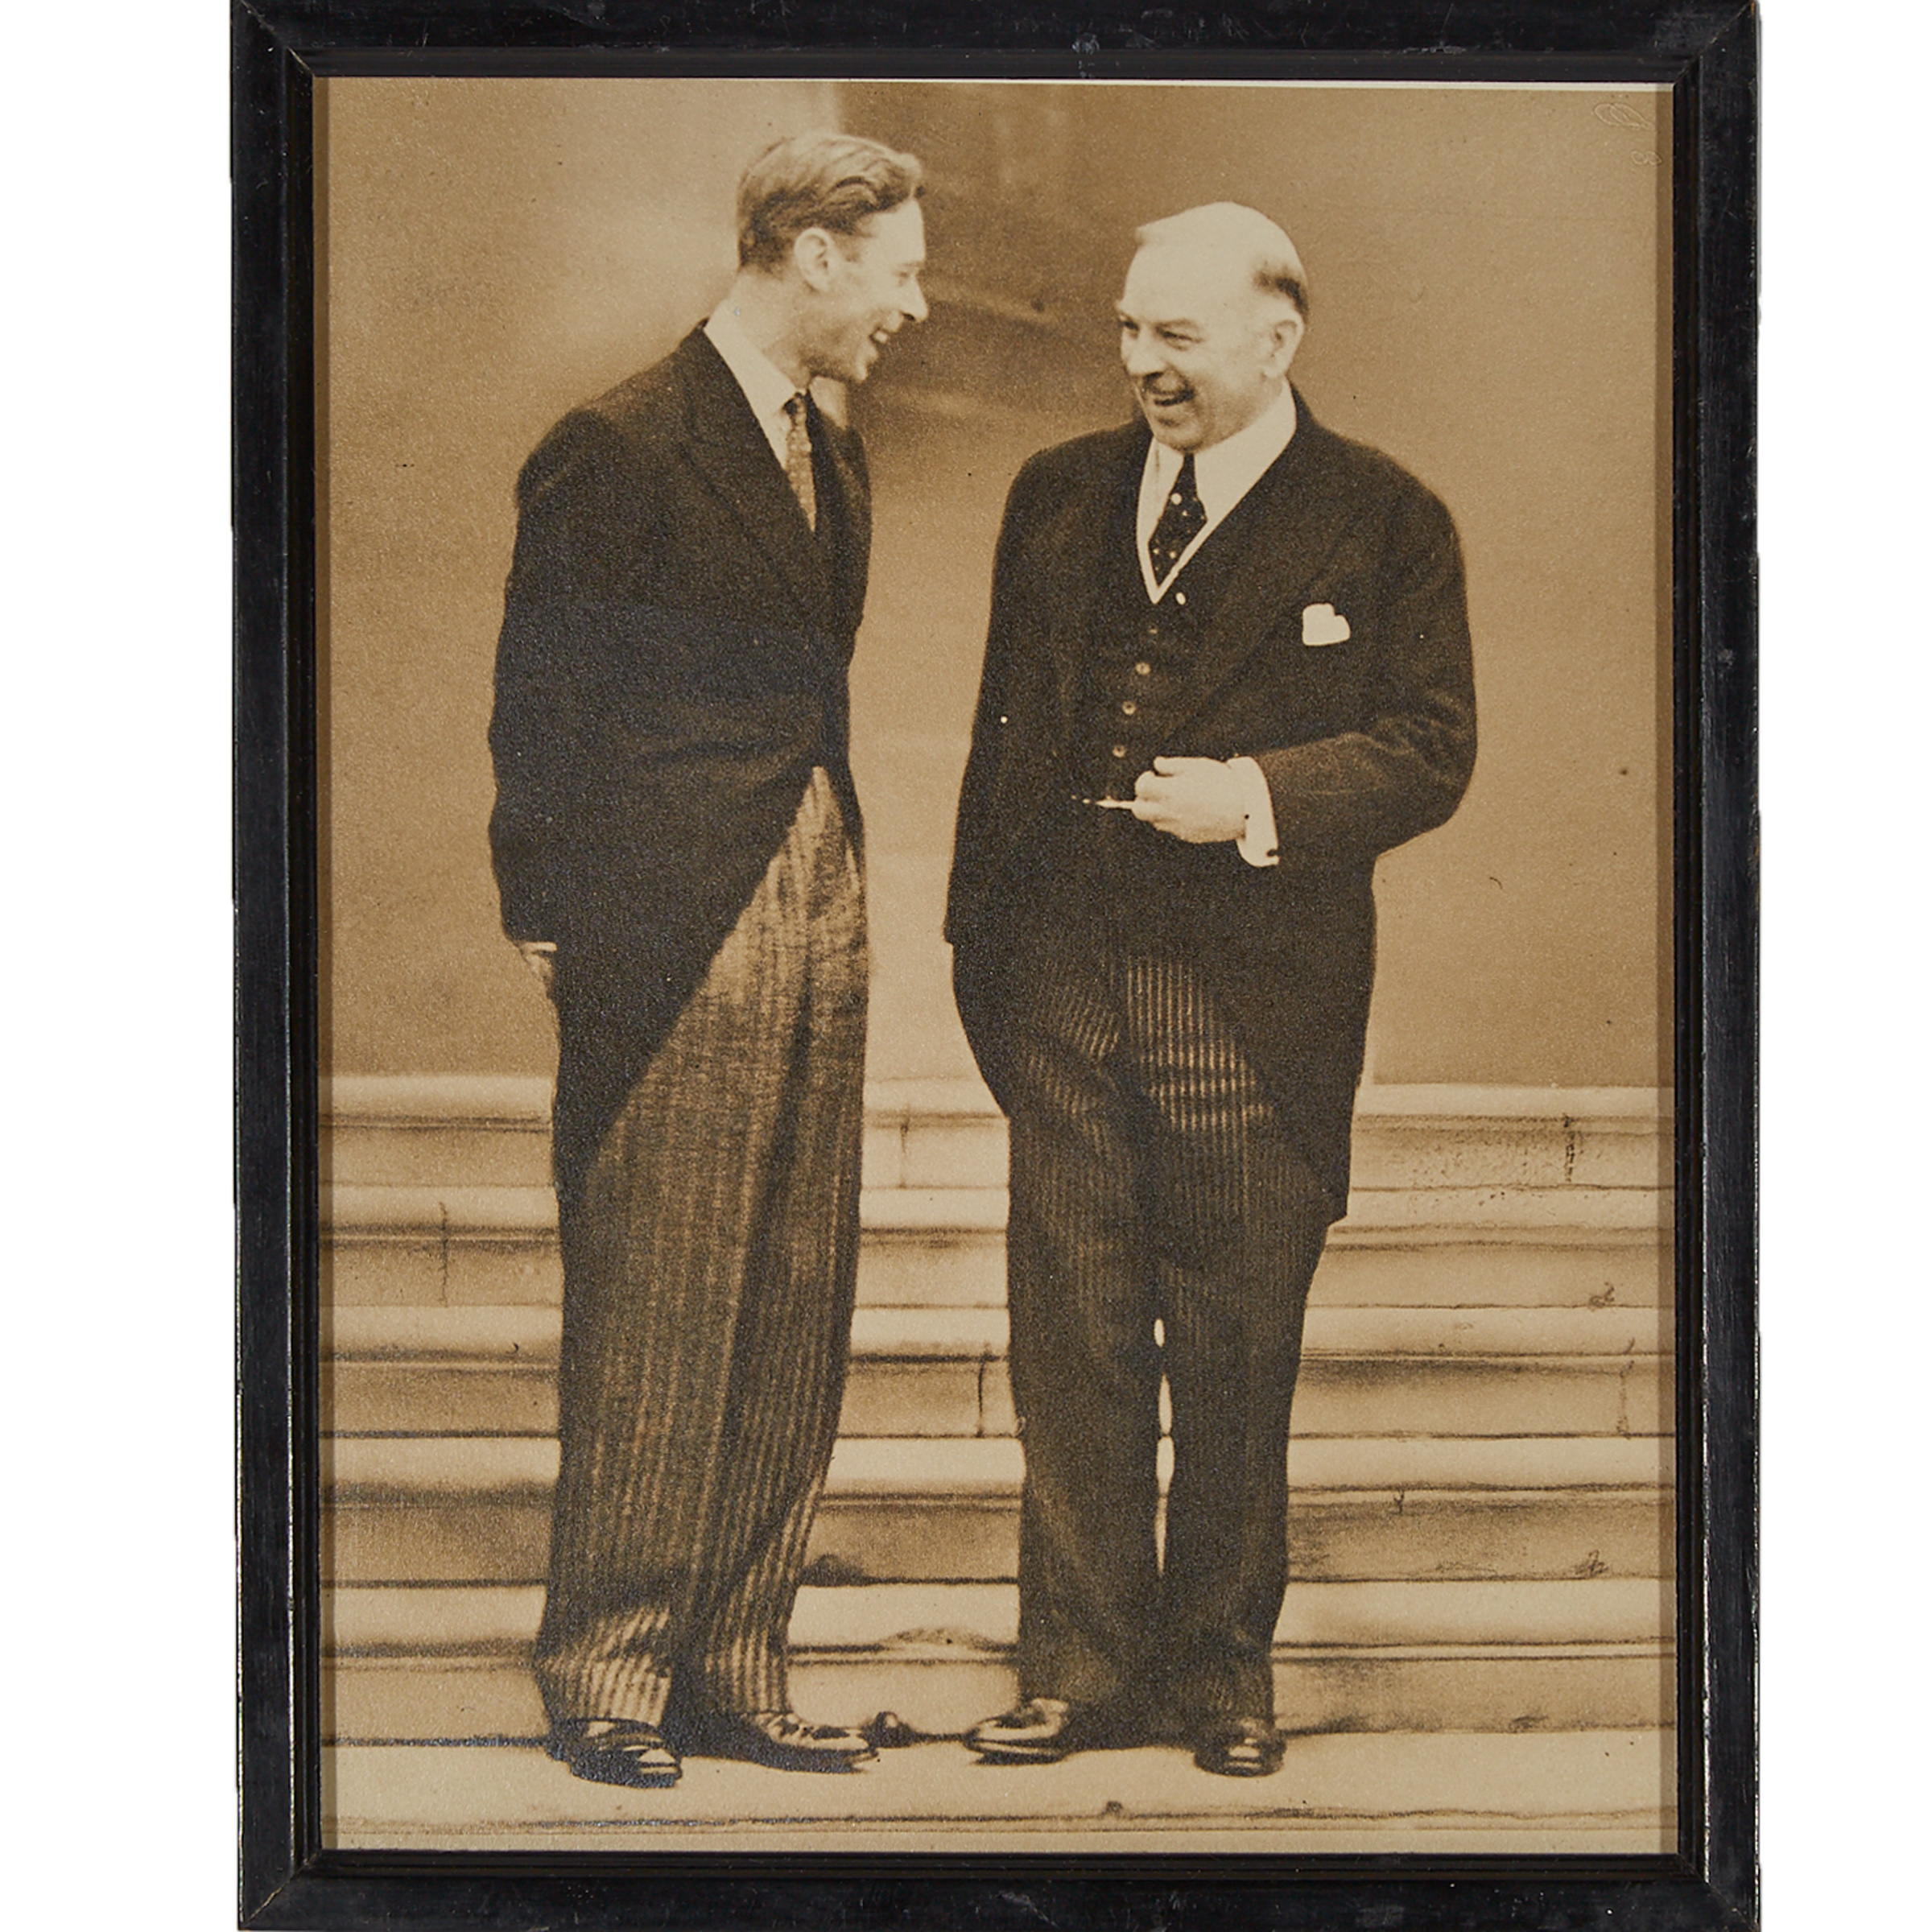 Two Press Photographs of William Lyon Mackenzie King, mid 20th century